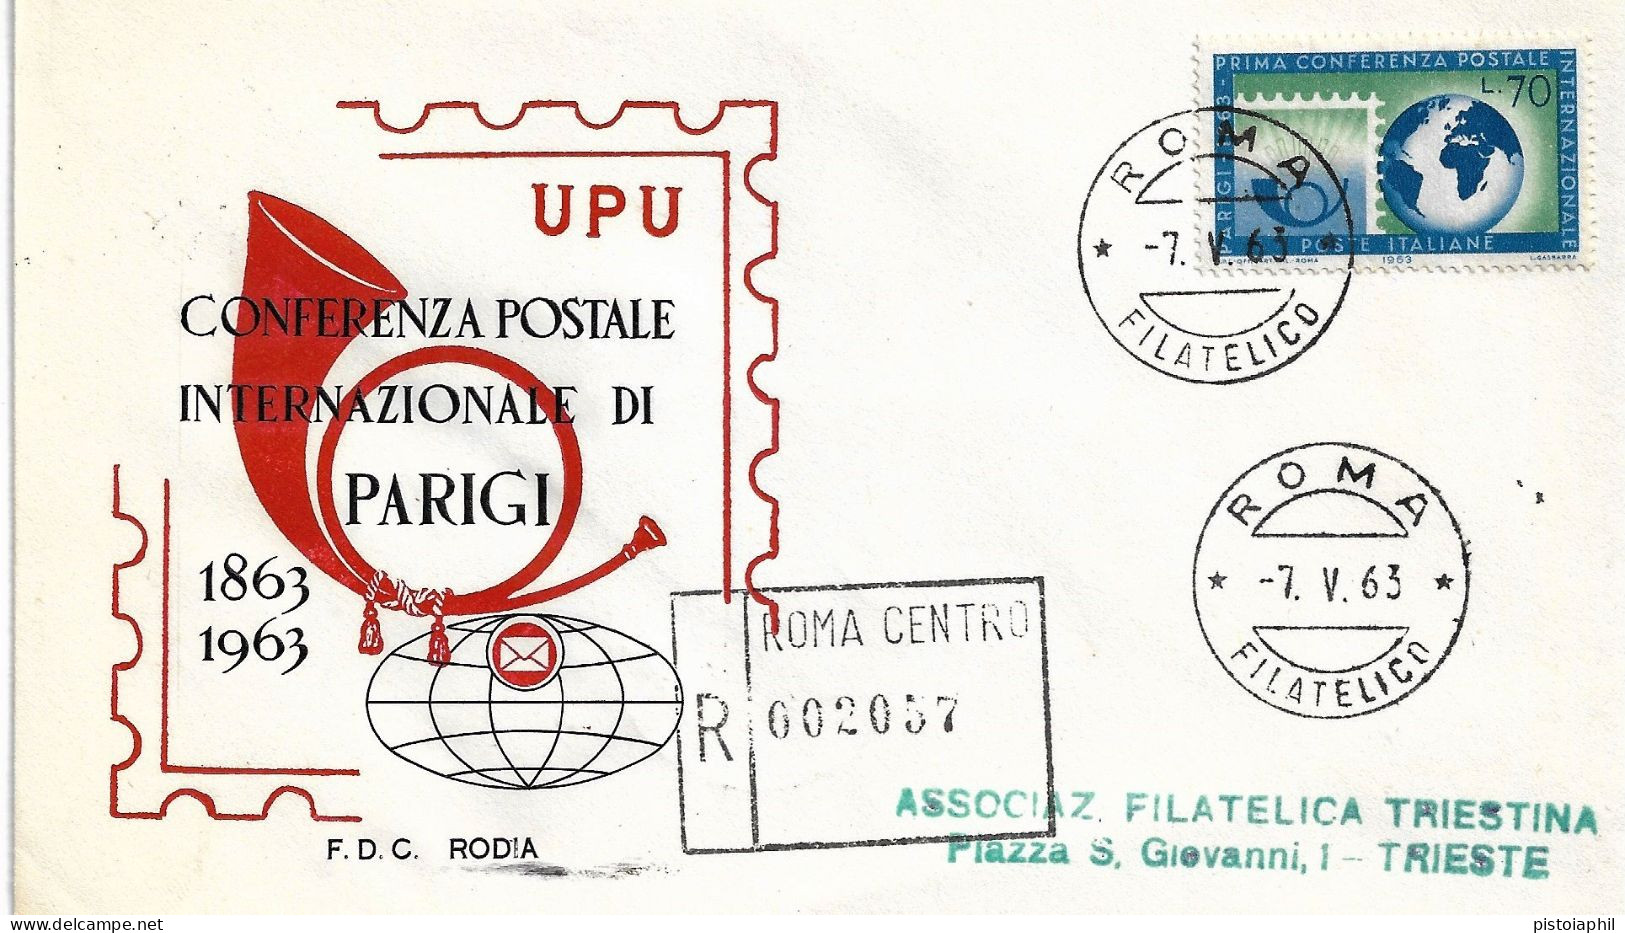 Fdc Rodia: CONFERENZA POSTALE INTERNAZIONALE DI PARIGI (1963); Raccomandata; AF:Roma - FDC